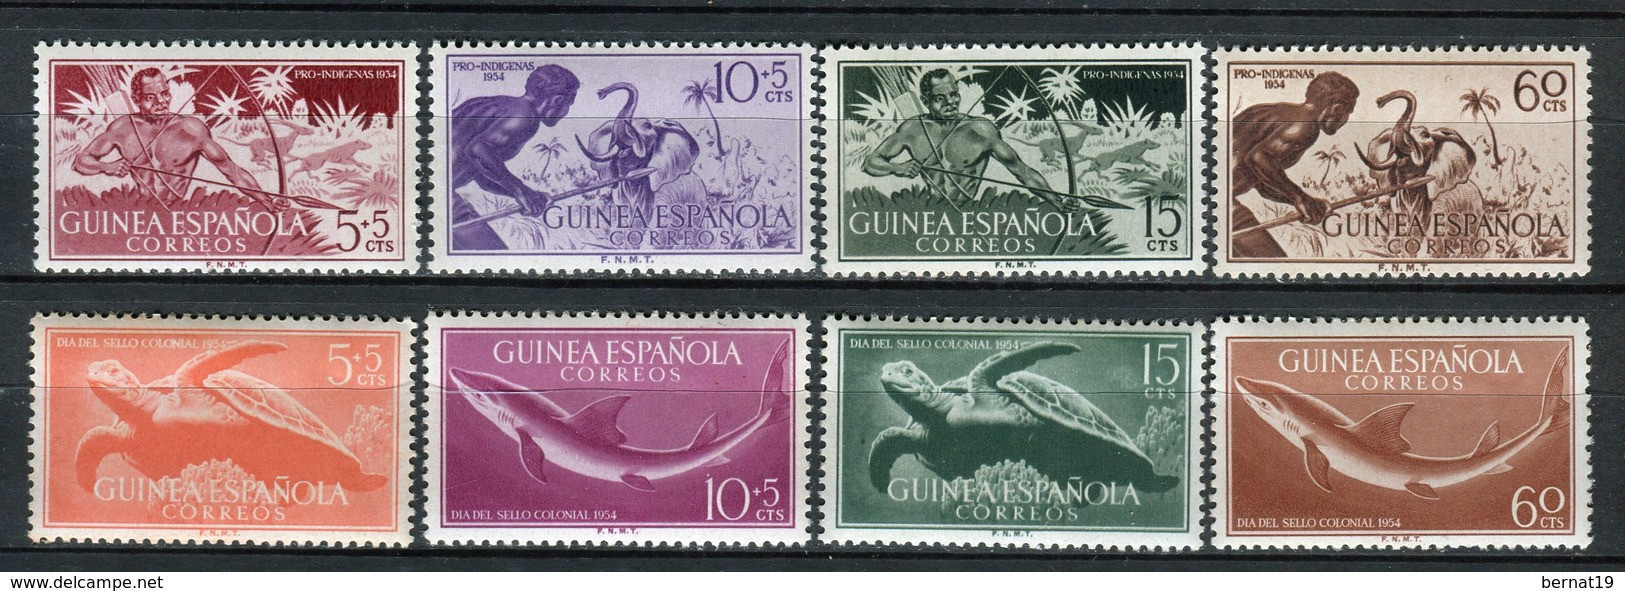 Guinea  Española 1954 Completo ** MNH. - Guinea Española